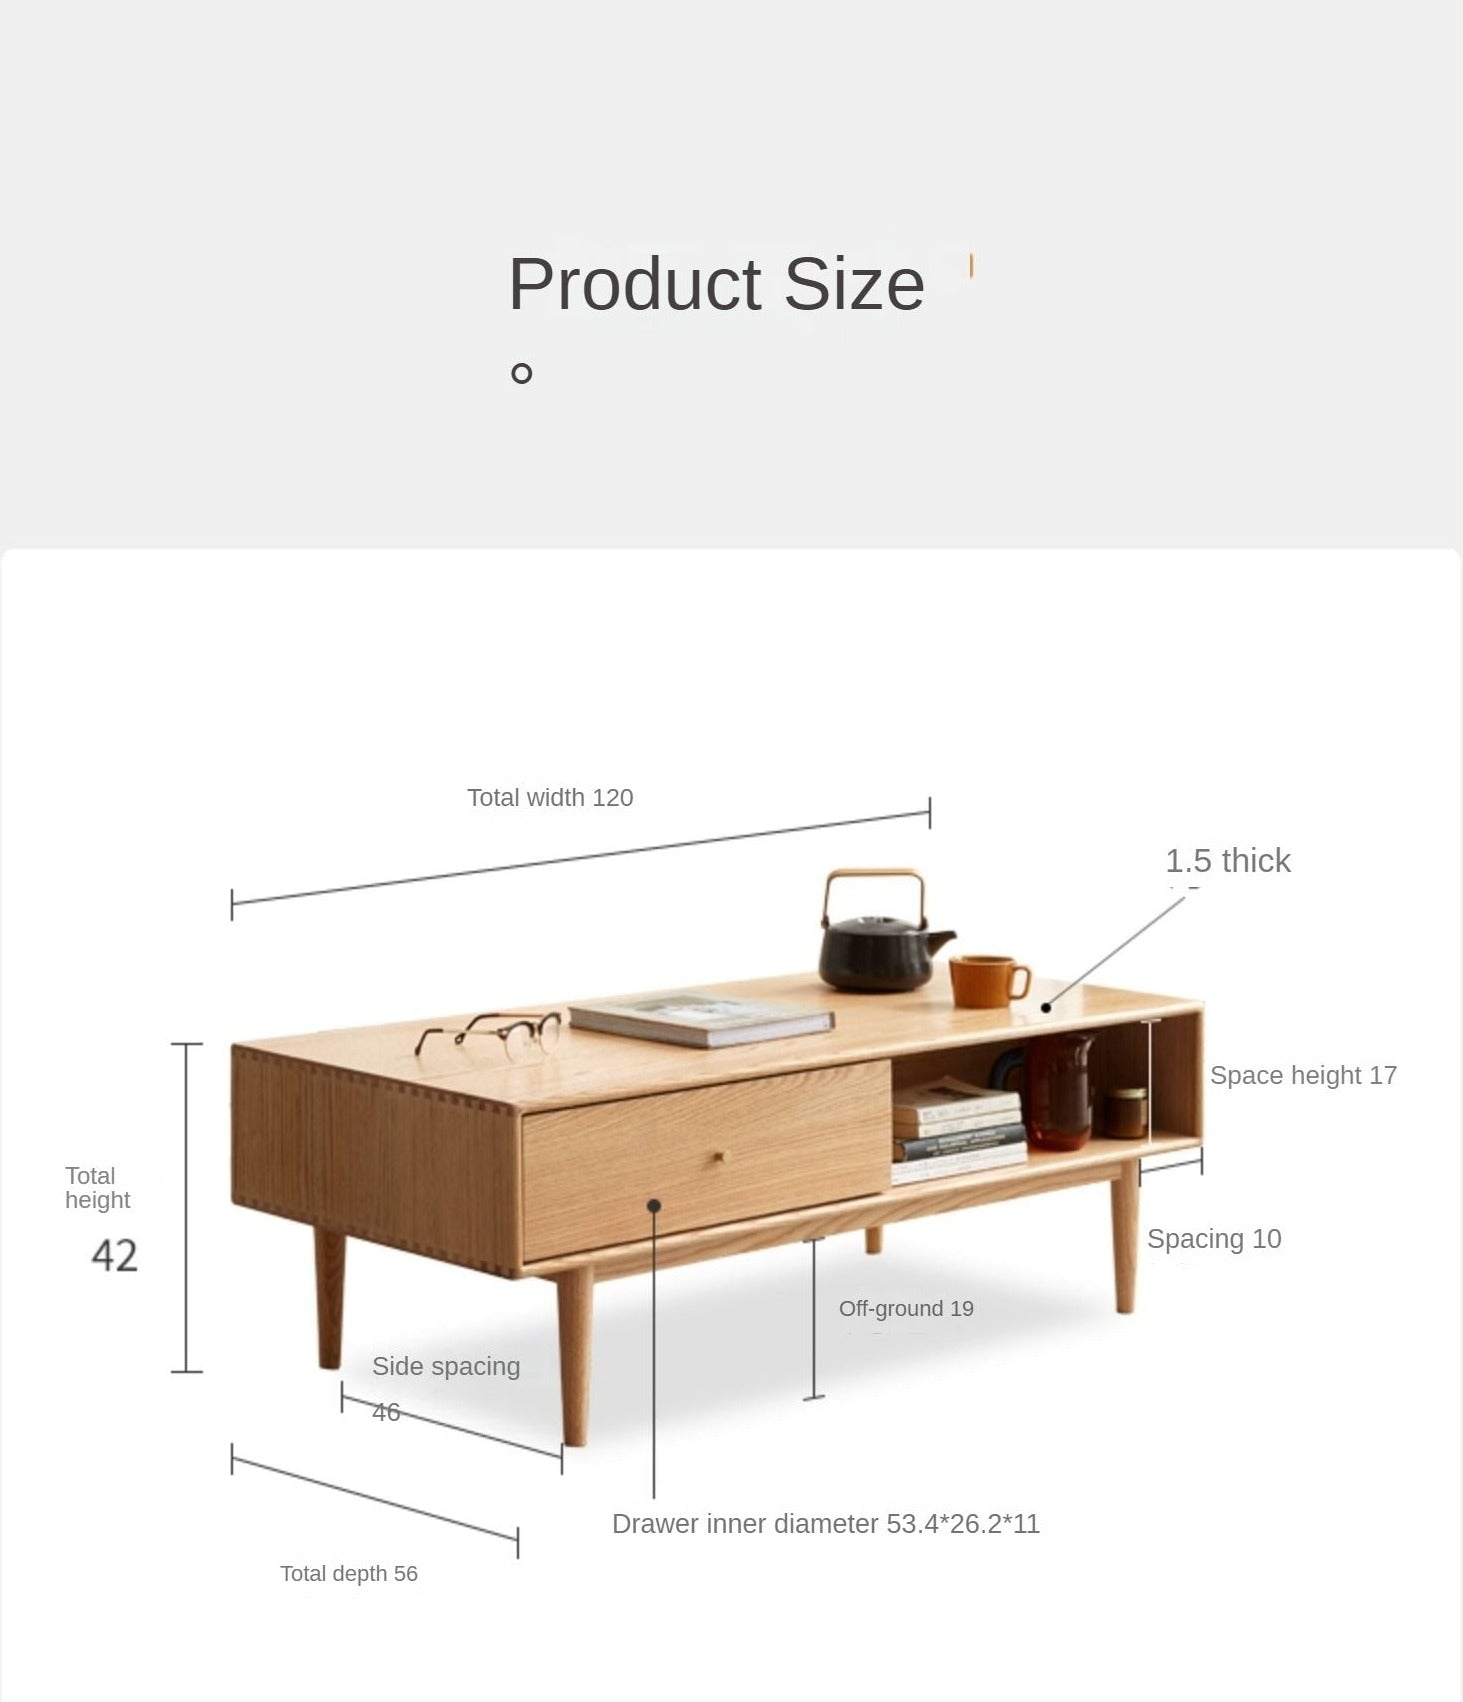 Oak solid wood rattan coffee table modern simple "